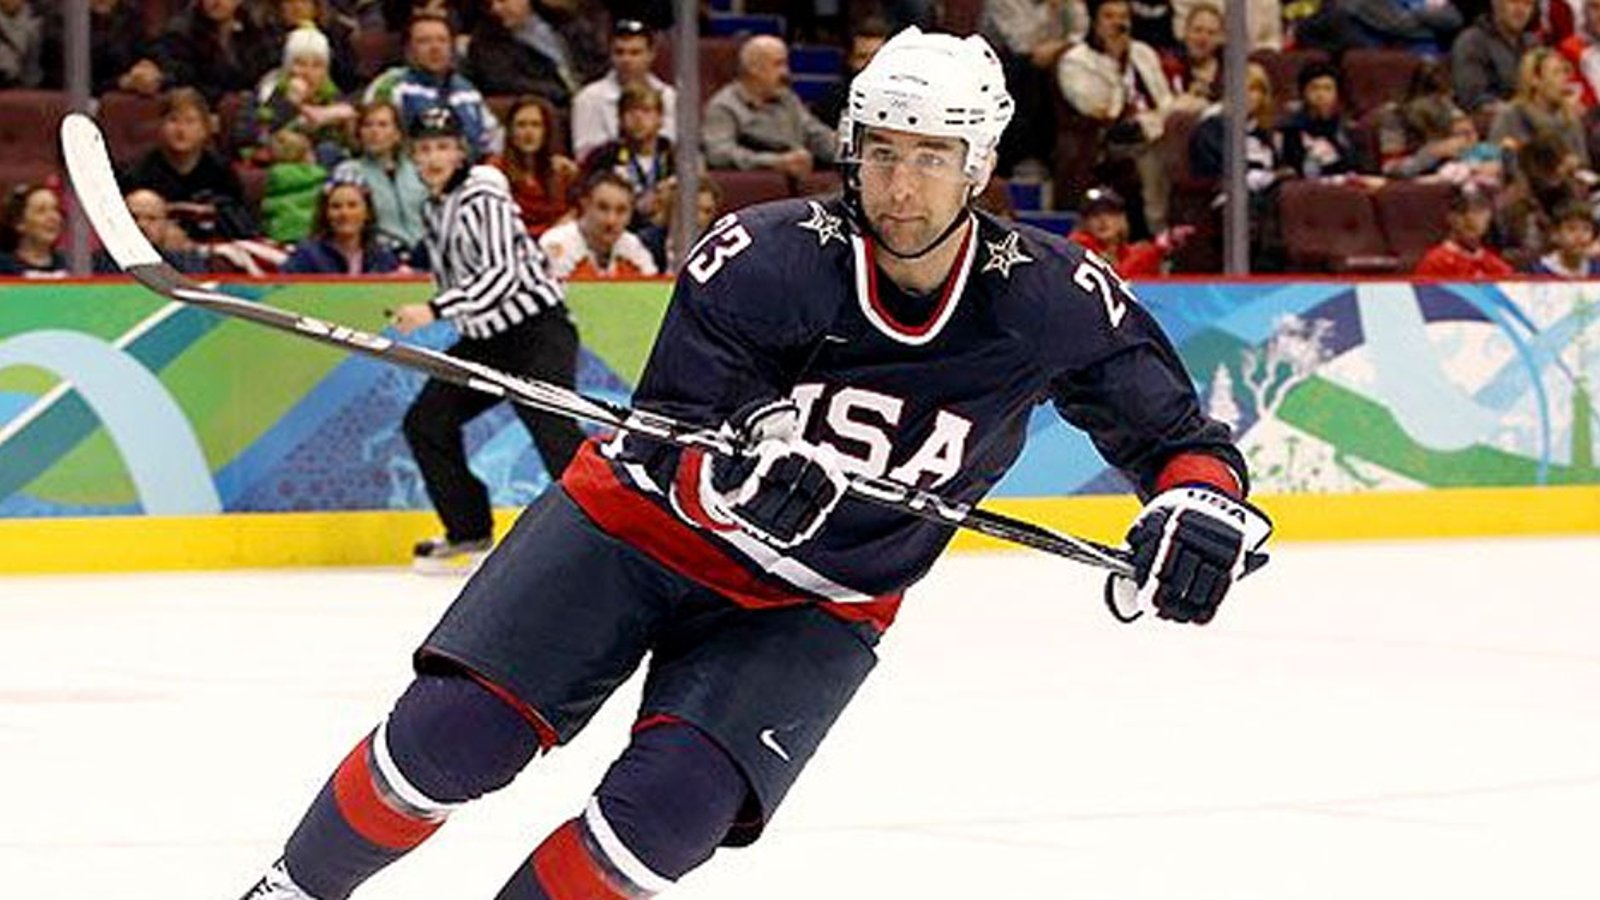 Former NHLer Chris Drury is the new boss of USA Hockey